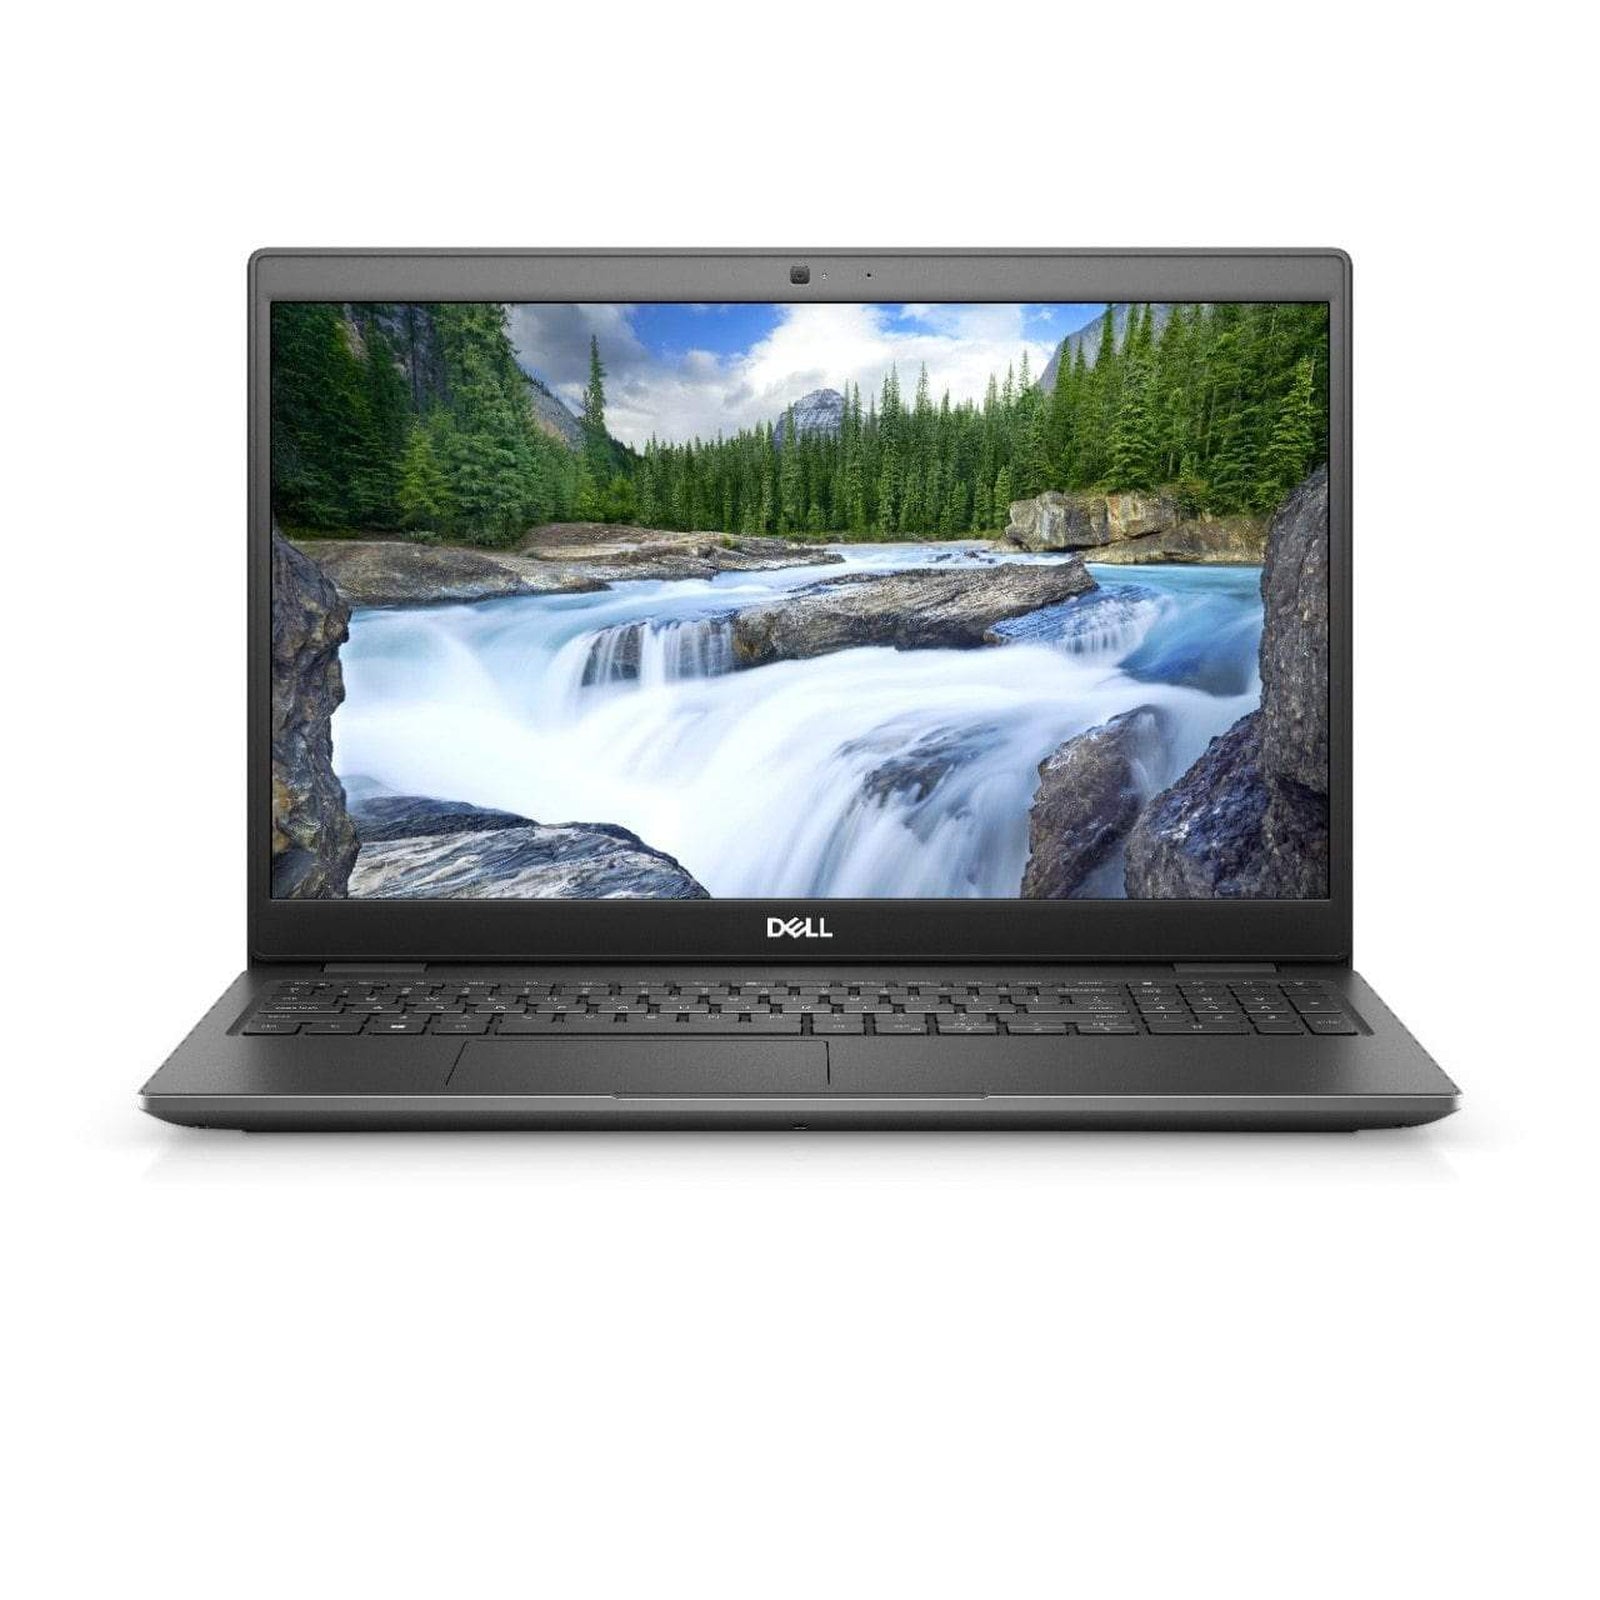 BSB-NO17YCYQLMY7BRNC-REF-REF-LAP-DL 2020 Dell Latitude 3510 Laptop 15.6" - i7 - i7-10510U - Quad Core 4.9Ghz - 256GB SSD - 8GB RAM - 1920x1080 FHD - Windows 10 Pro Black